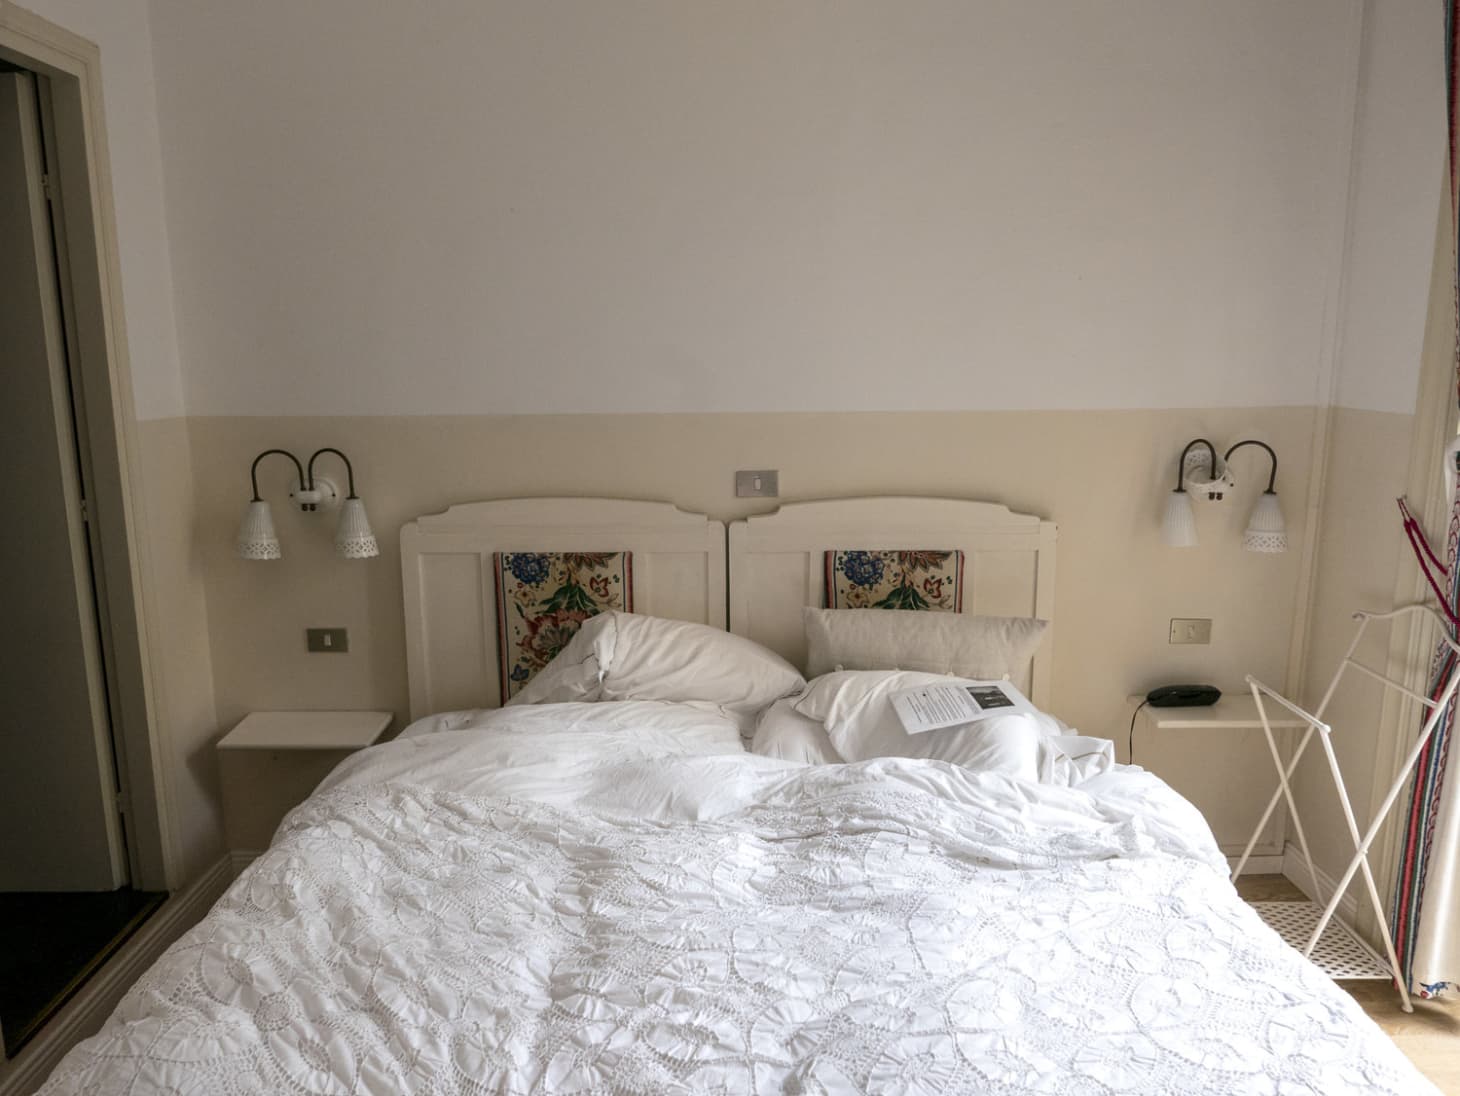 Messy Hotel Room Photo Series Left Behind Giulia Dini